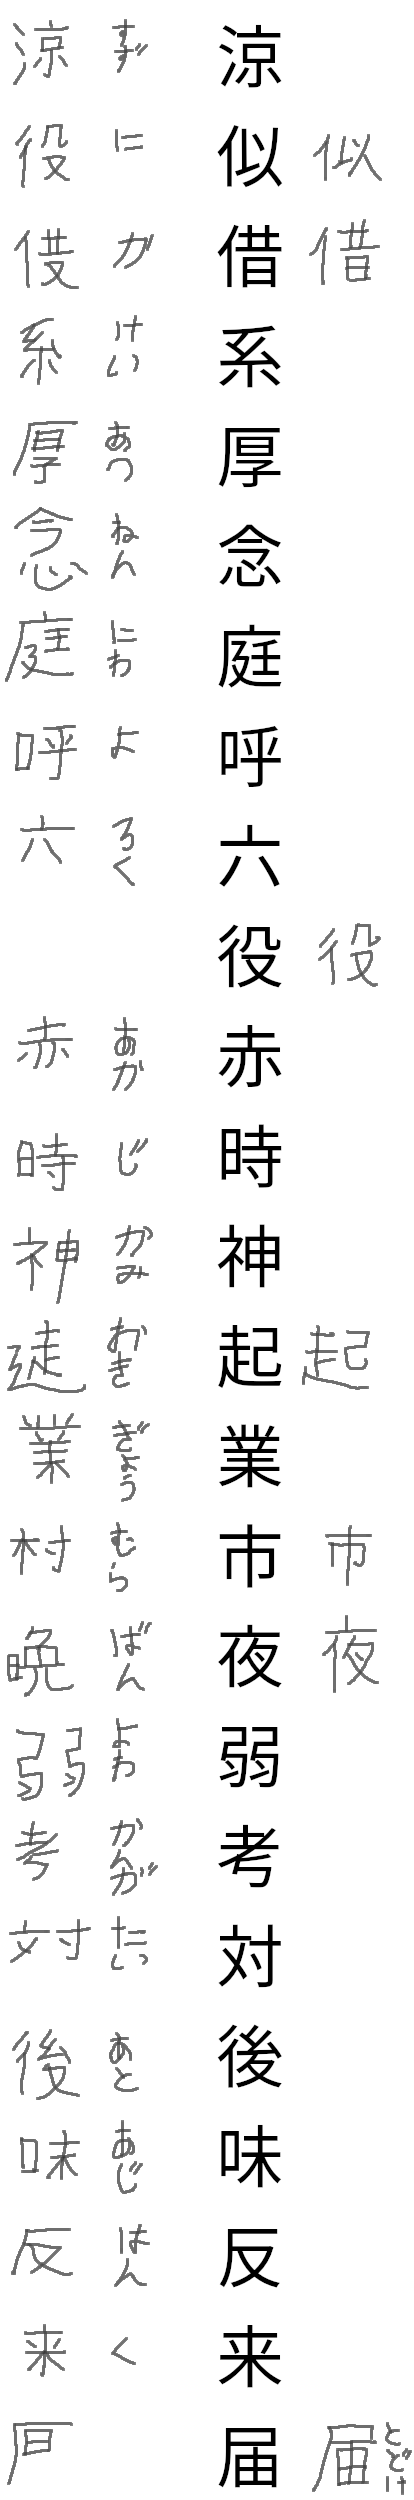 kanji test row 23